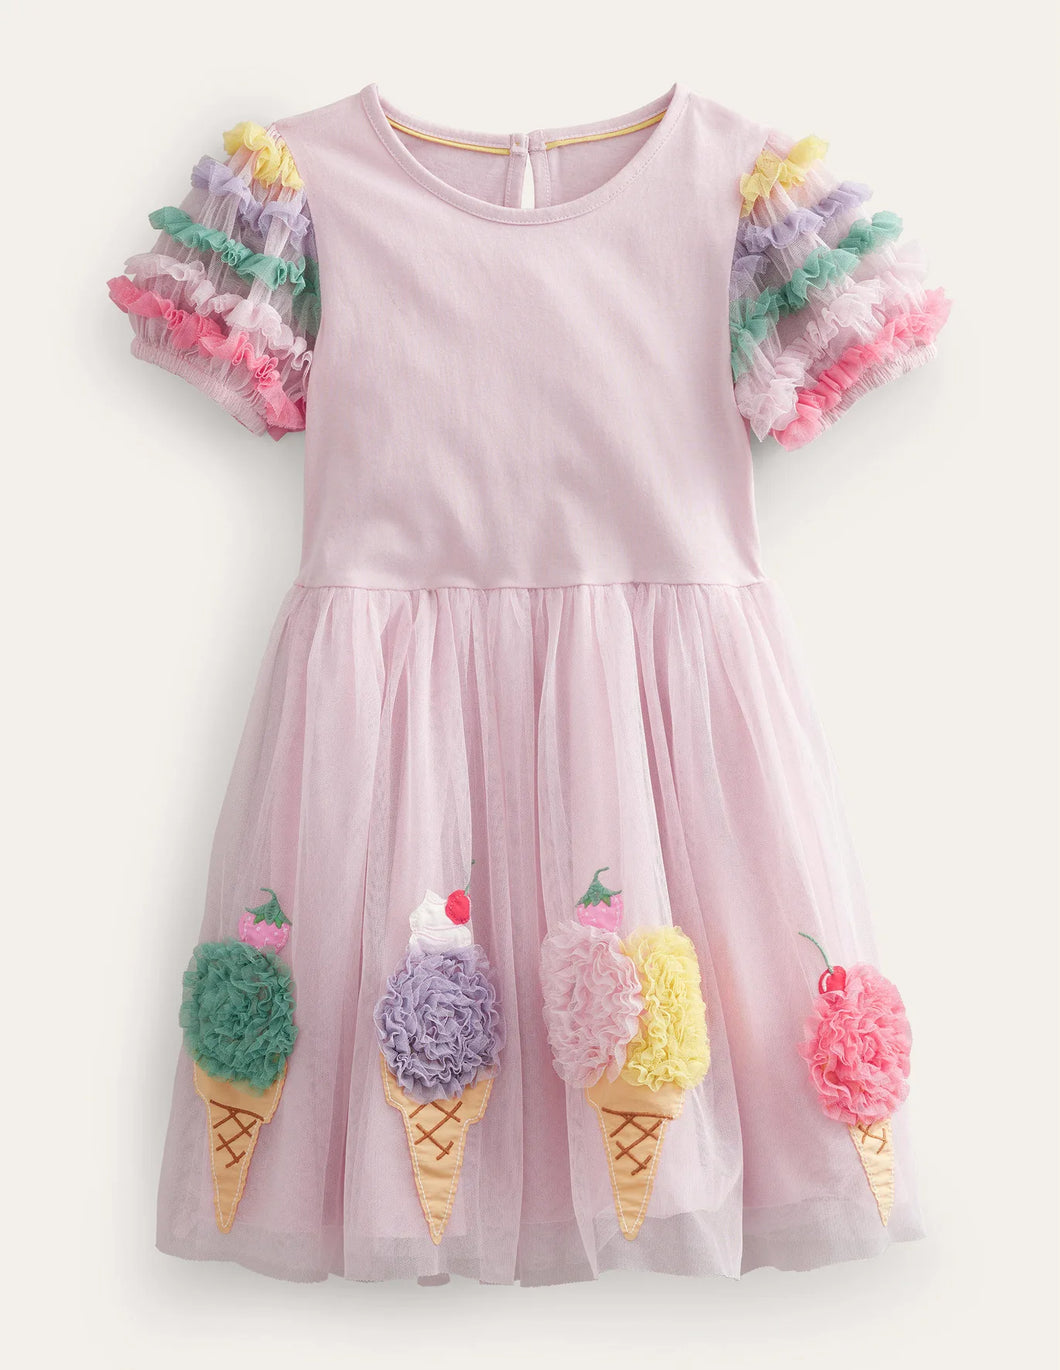 NWT Mini Boden Ice Cream Tulle Dress